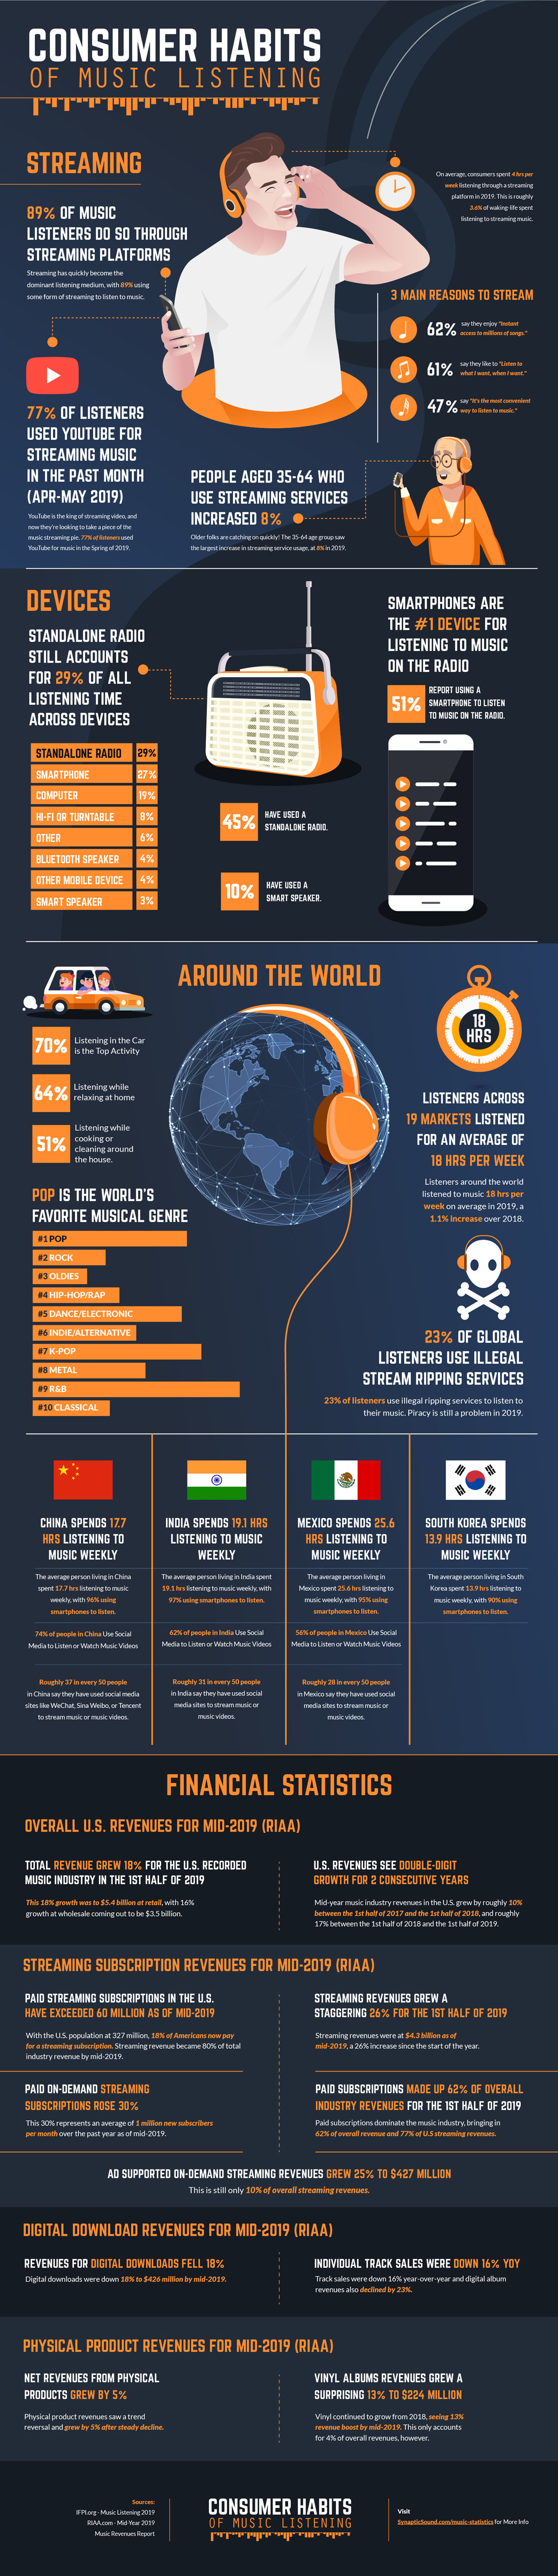 Consumer Habits of Music Listening